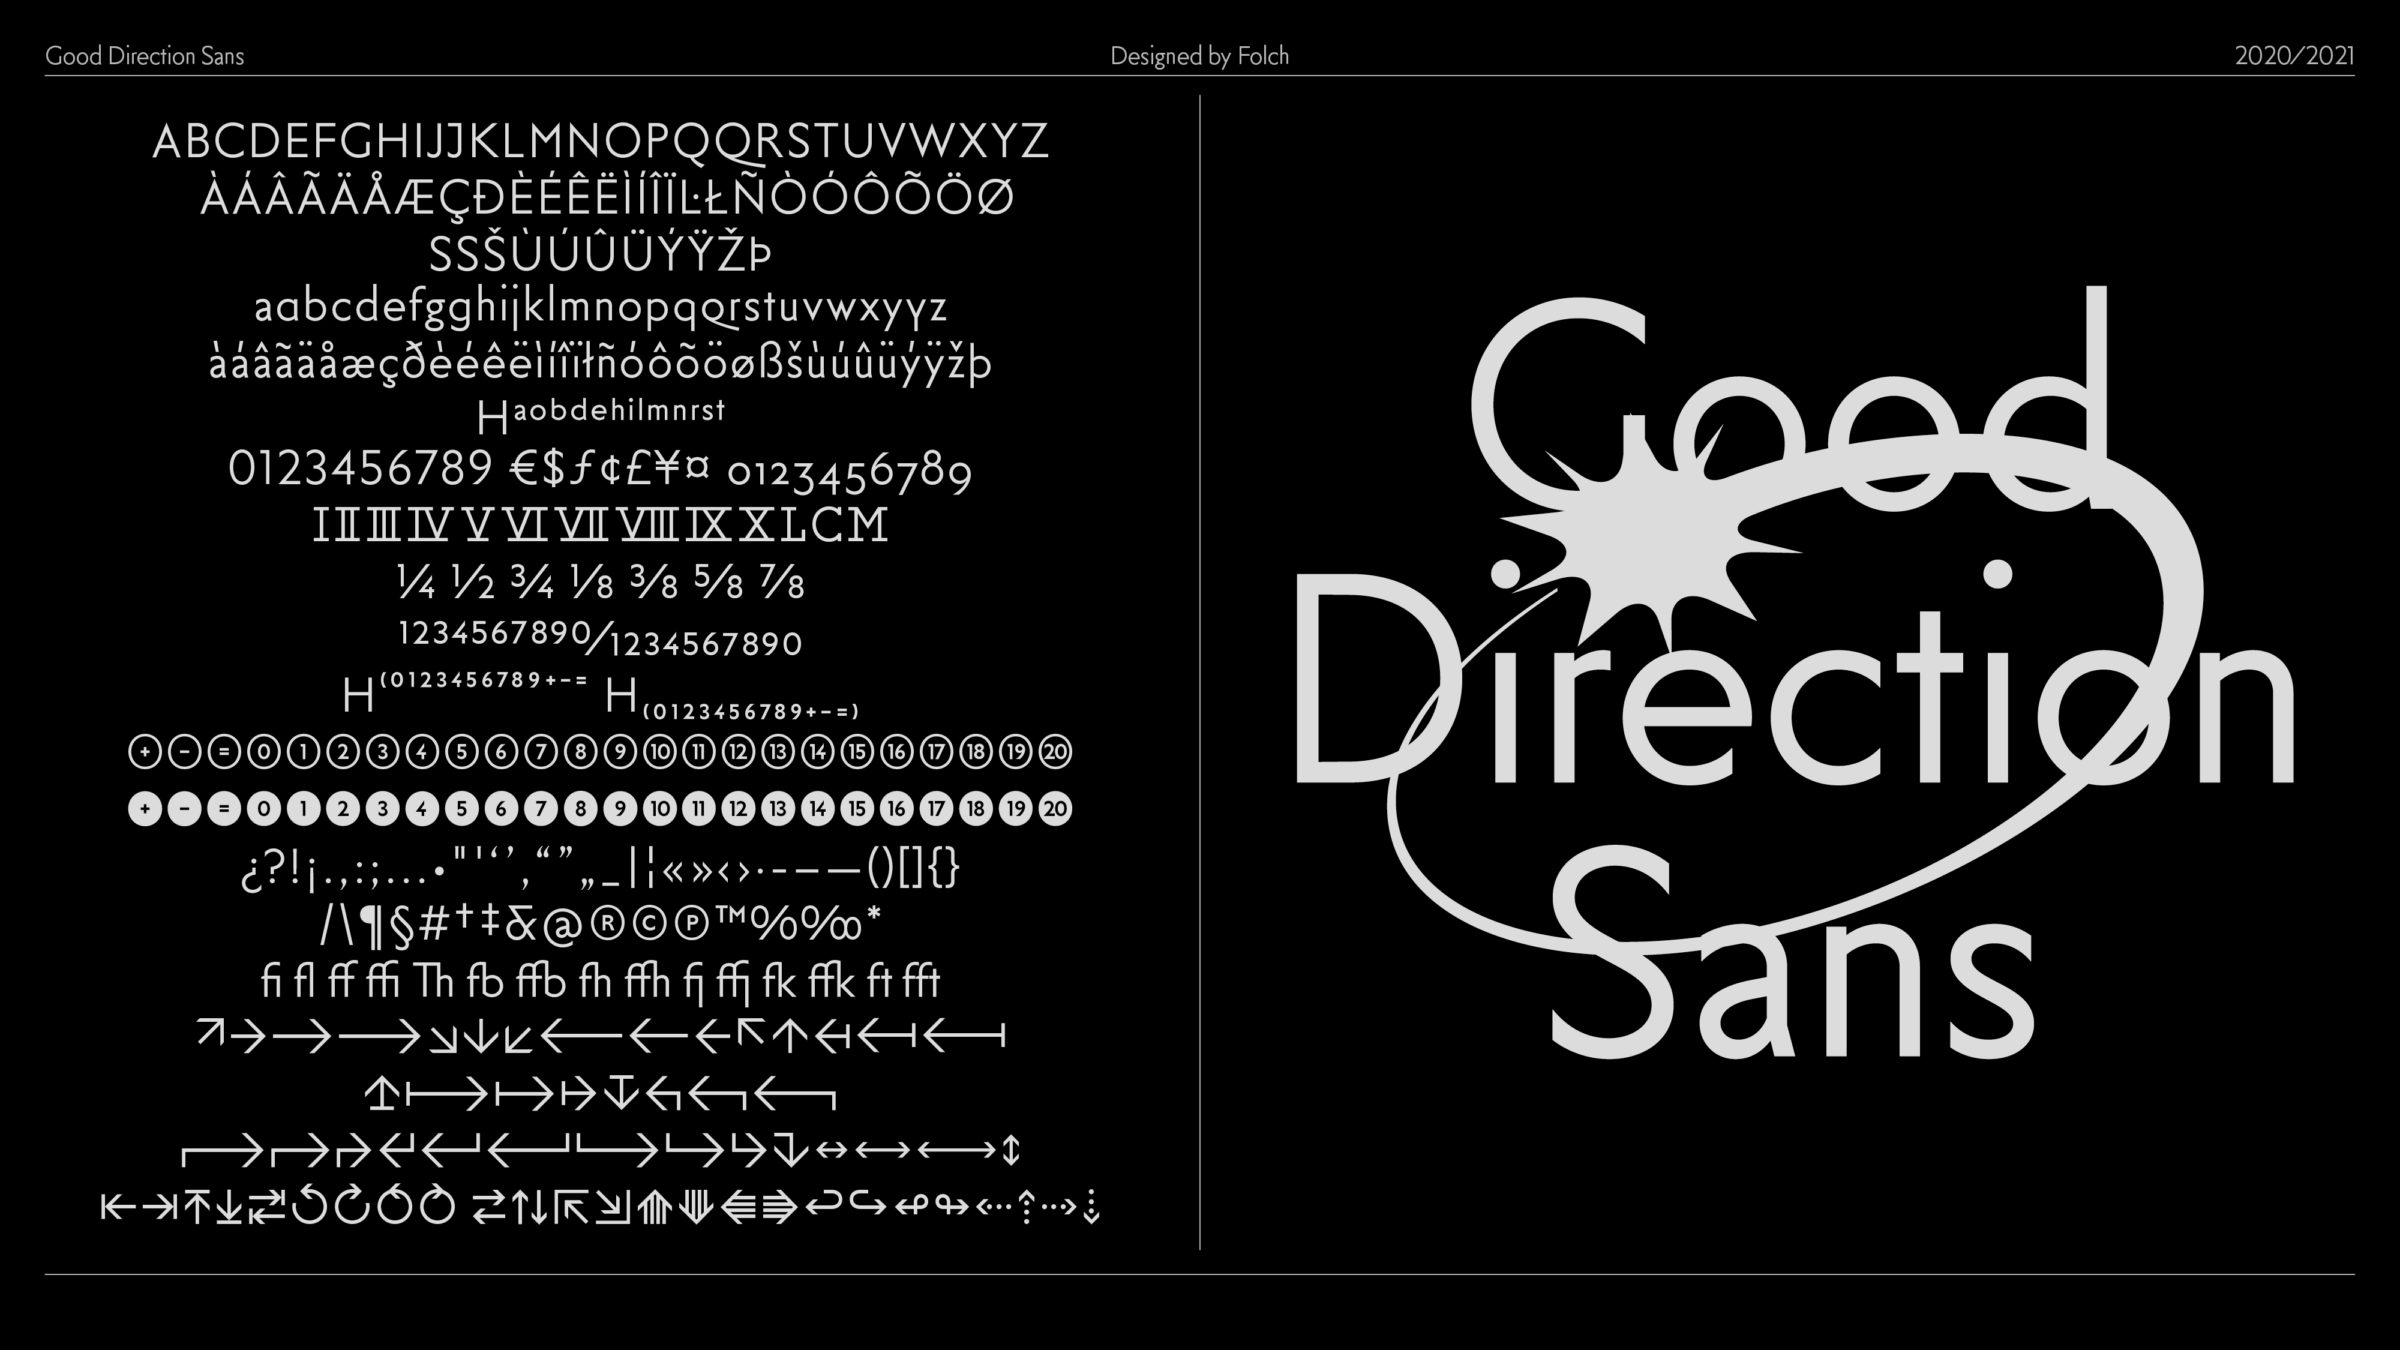 Good Direction Sans | FOLCH